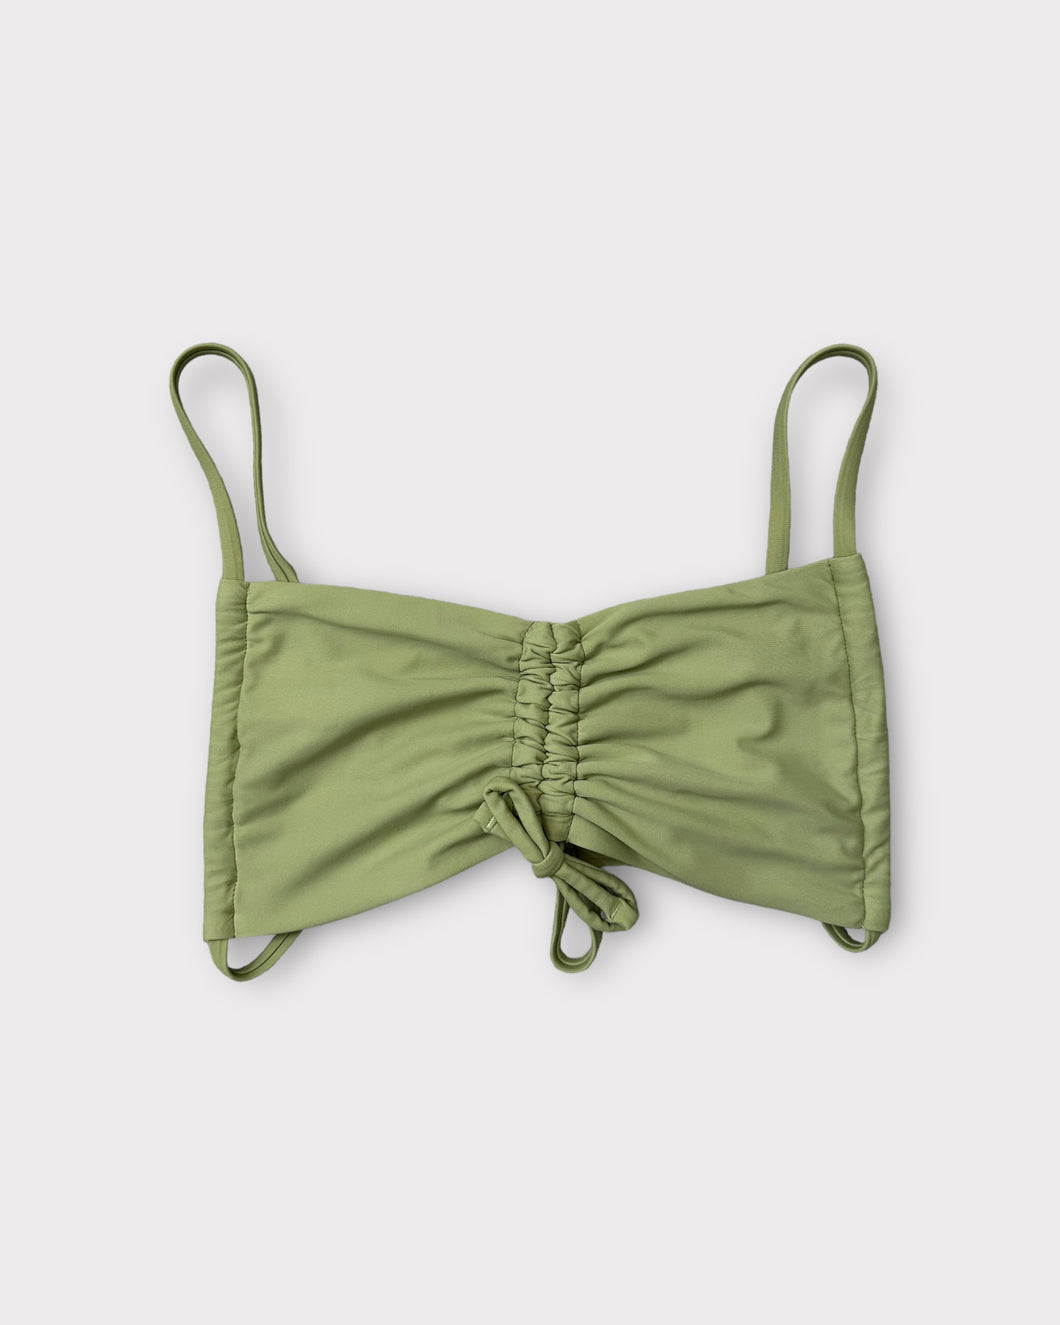 Aerie Green Cinched Bikini Top (M)